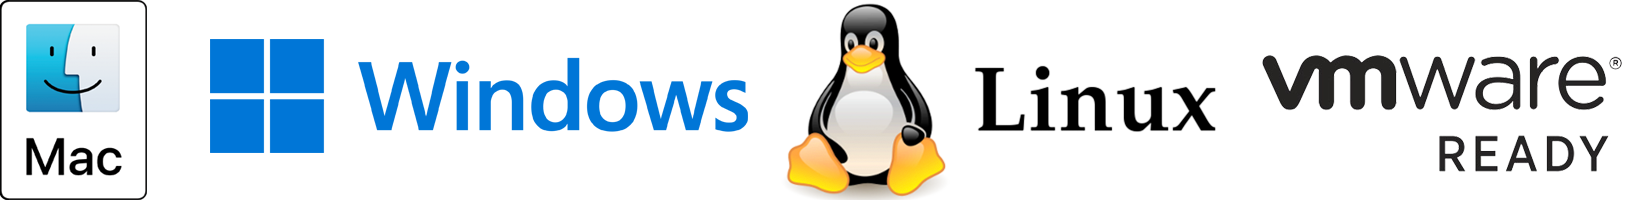 Mac, Windows, Linux, and VMWare Ready Logos